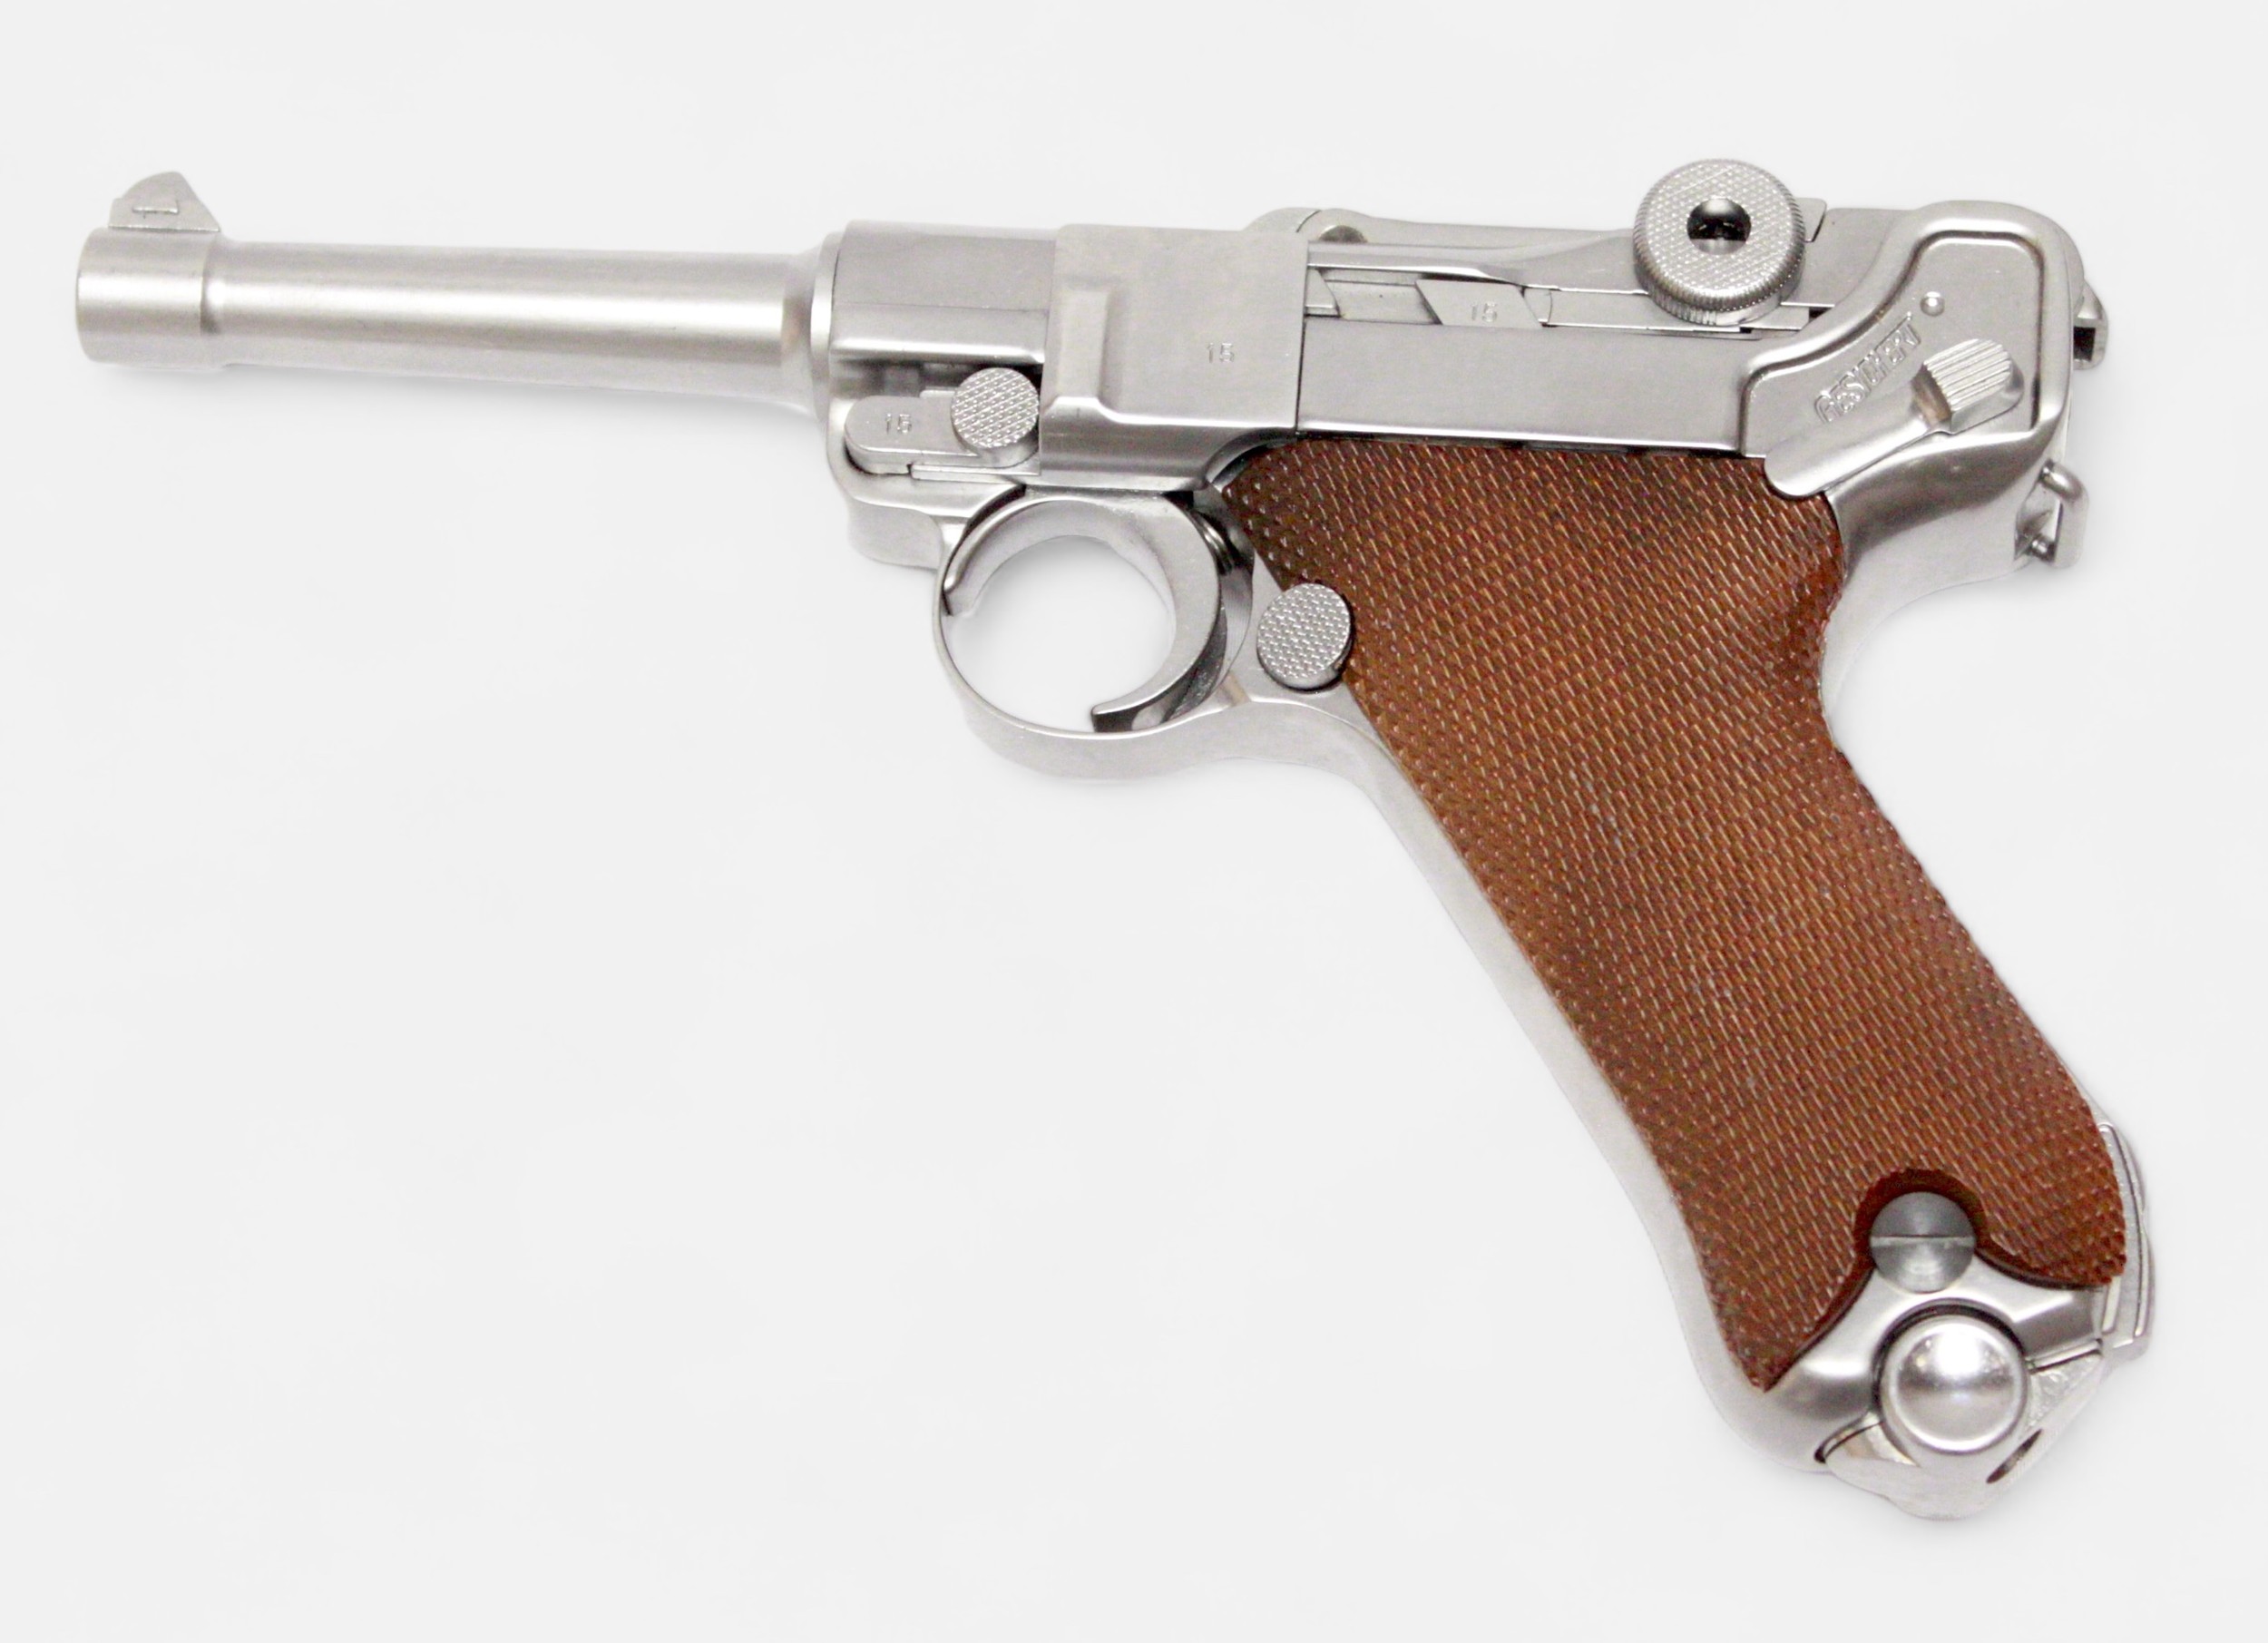 A Gesichert CO2 air pistol modelled as a Luger pistol, stamped '1915', with brown plastic grip - Bild 2 aus 2